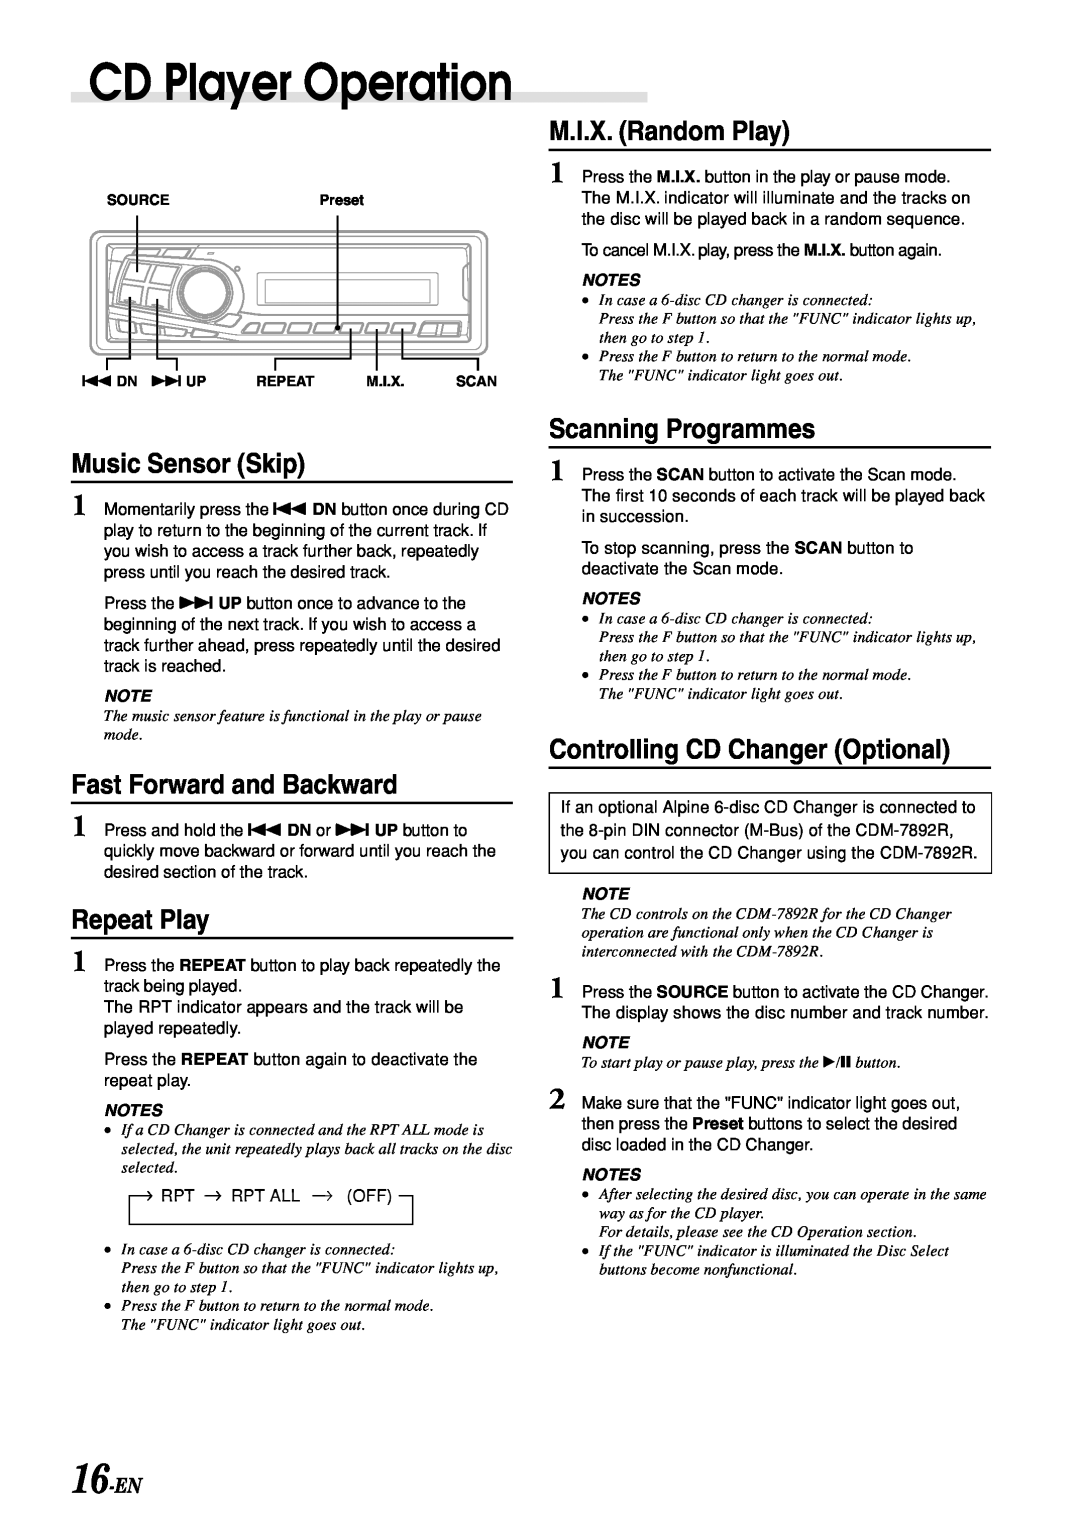 Alpine CDM-7892R M.I.X. Random Play, Music Sensor Skip, Fast Forward and Backward, Repeat Play, Scanning Programmes, 16-EN 